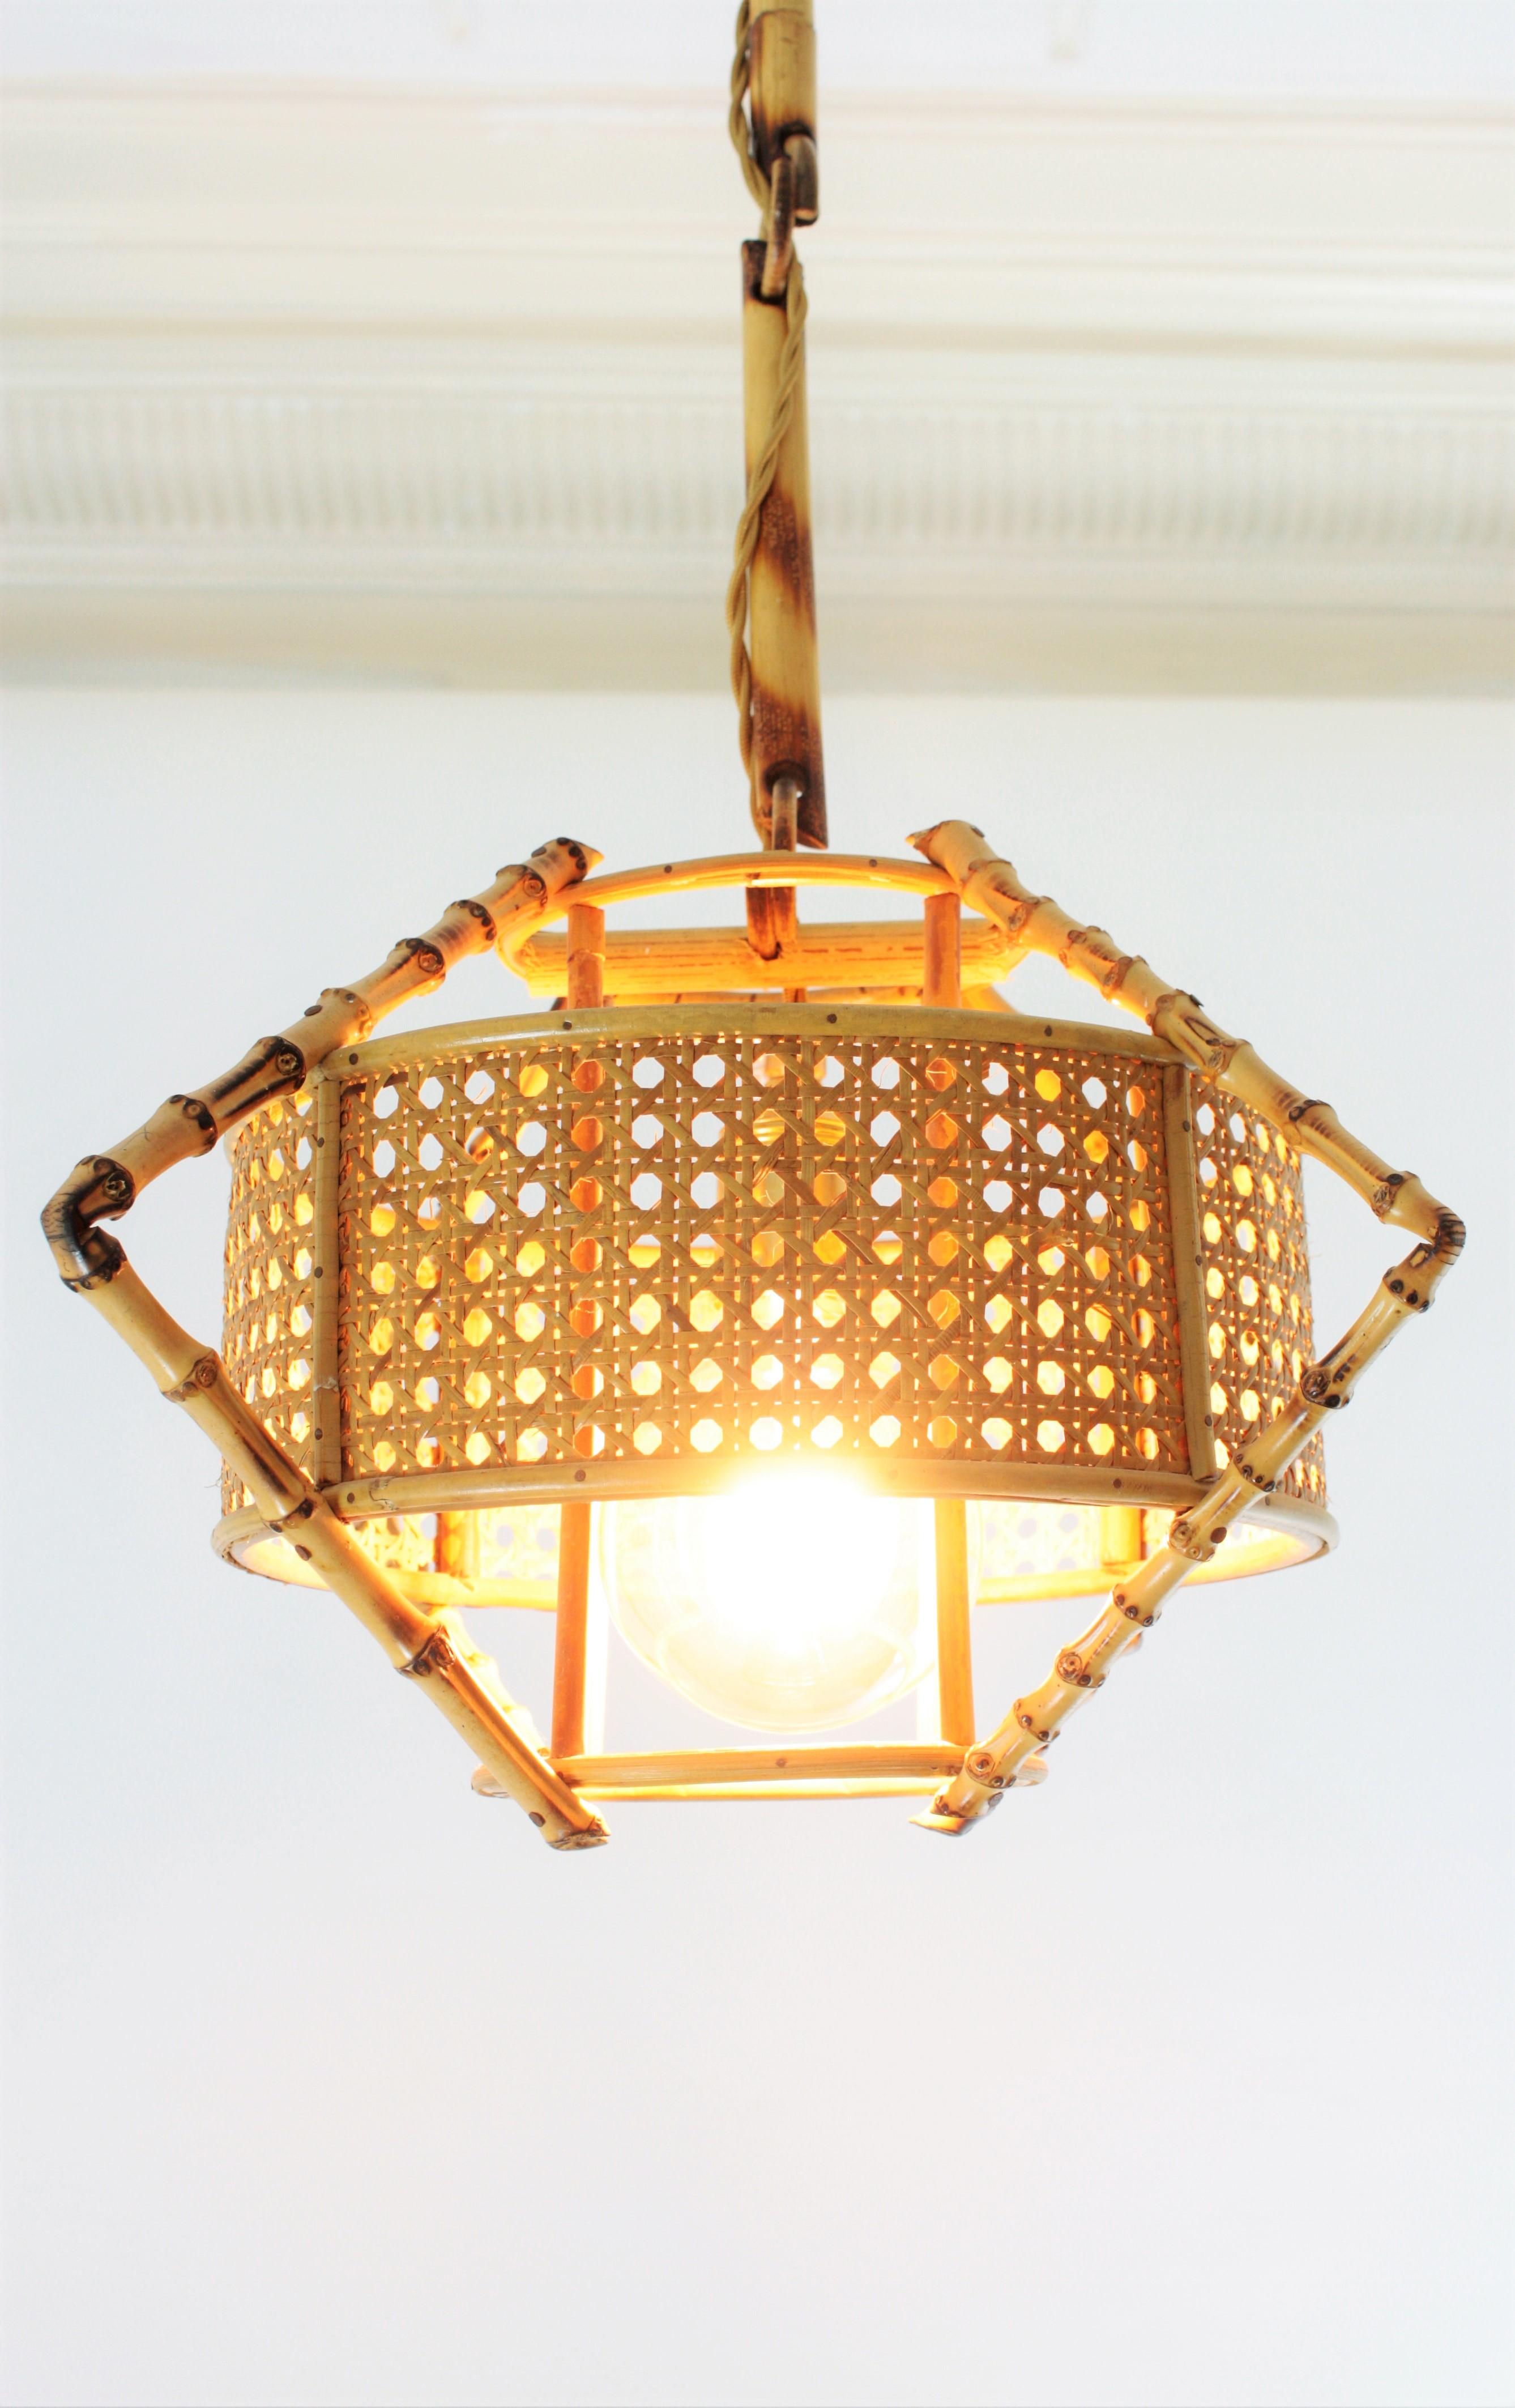 Spanish Mid-Century Modern Bamboo Rattan & Wicker Pendant Lamp with Tiki Accents 1